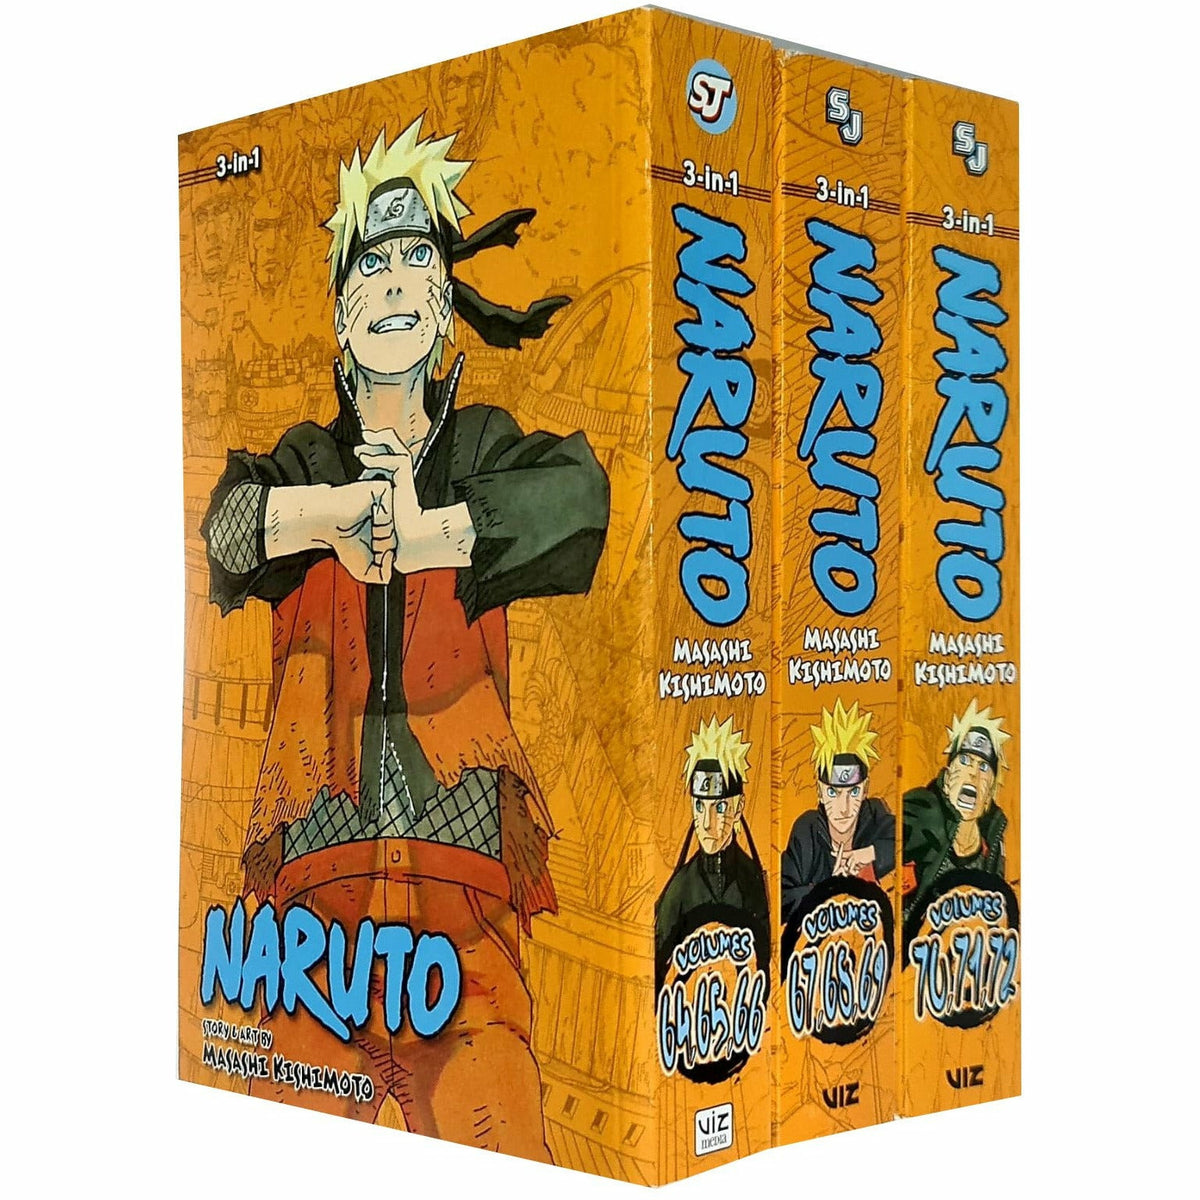 Naruto (3-in-1 Edition), Vol. 22: Includes Vols. 64, 65 & 66